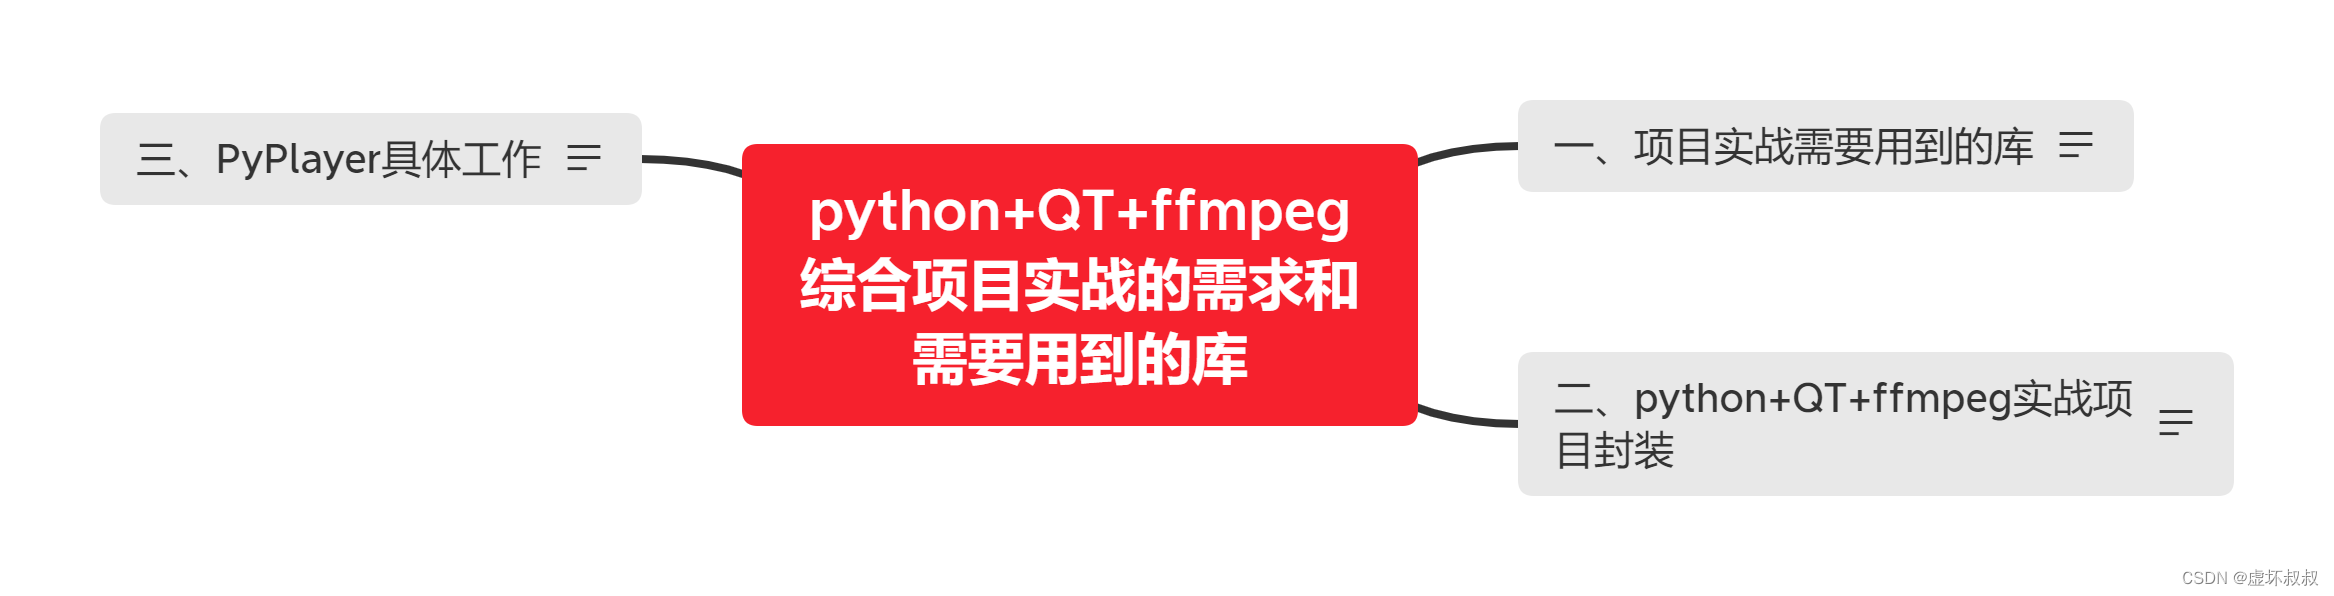 58036b6b08ae4838b2e42610ff349b8f - Python&C++相互混合调用编程全面实战-20python+QT+ffmpeg综合项目实战的需求和需要用到的库